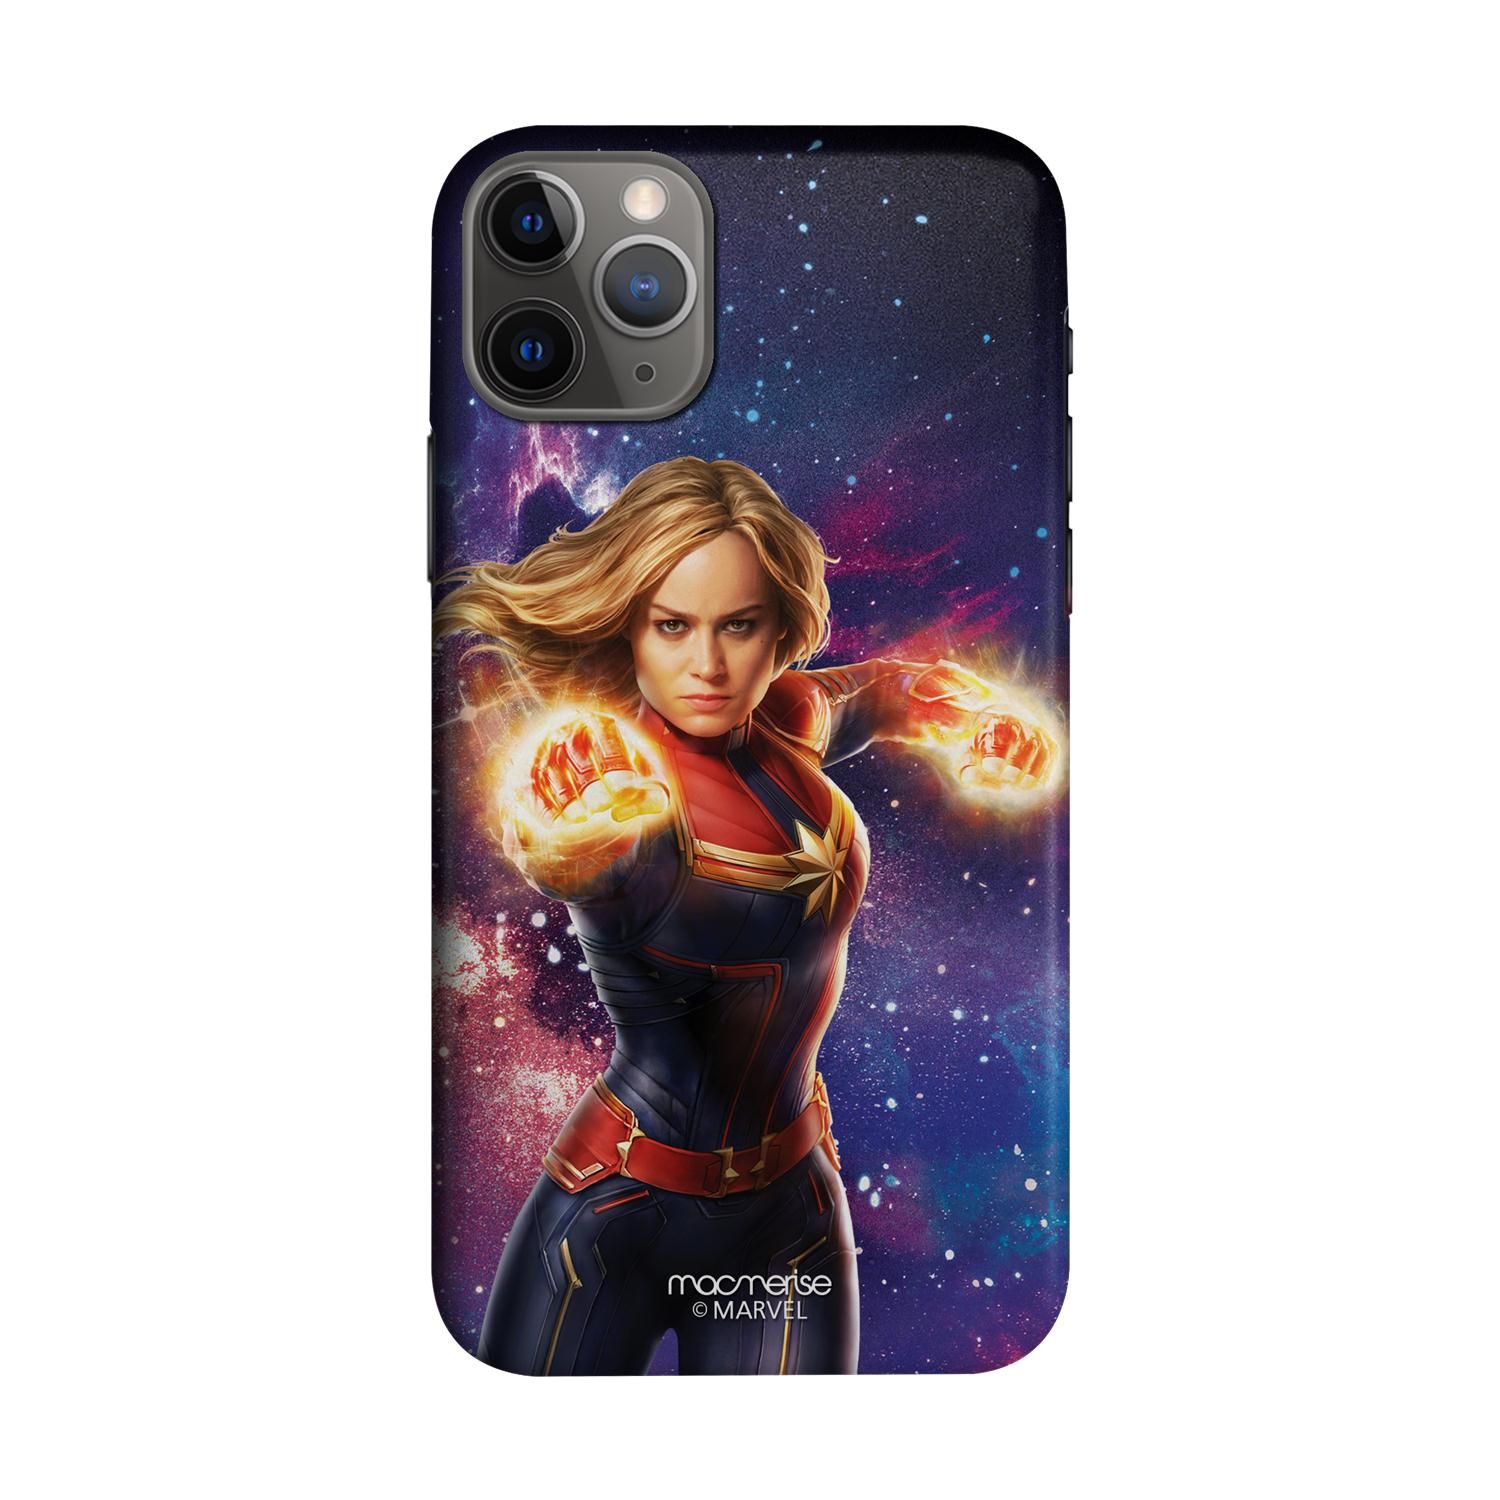 Buy Fierce Captain Marvel - Sleek Phone Case for iPhone 11 Pro Max Online